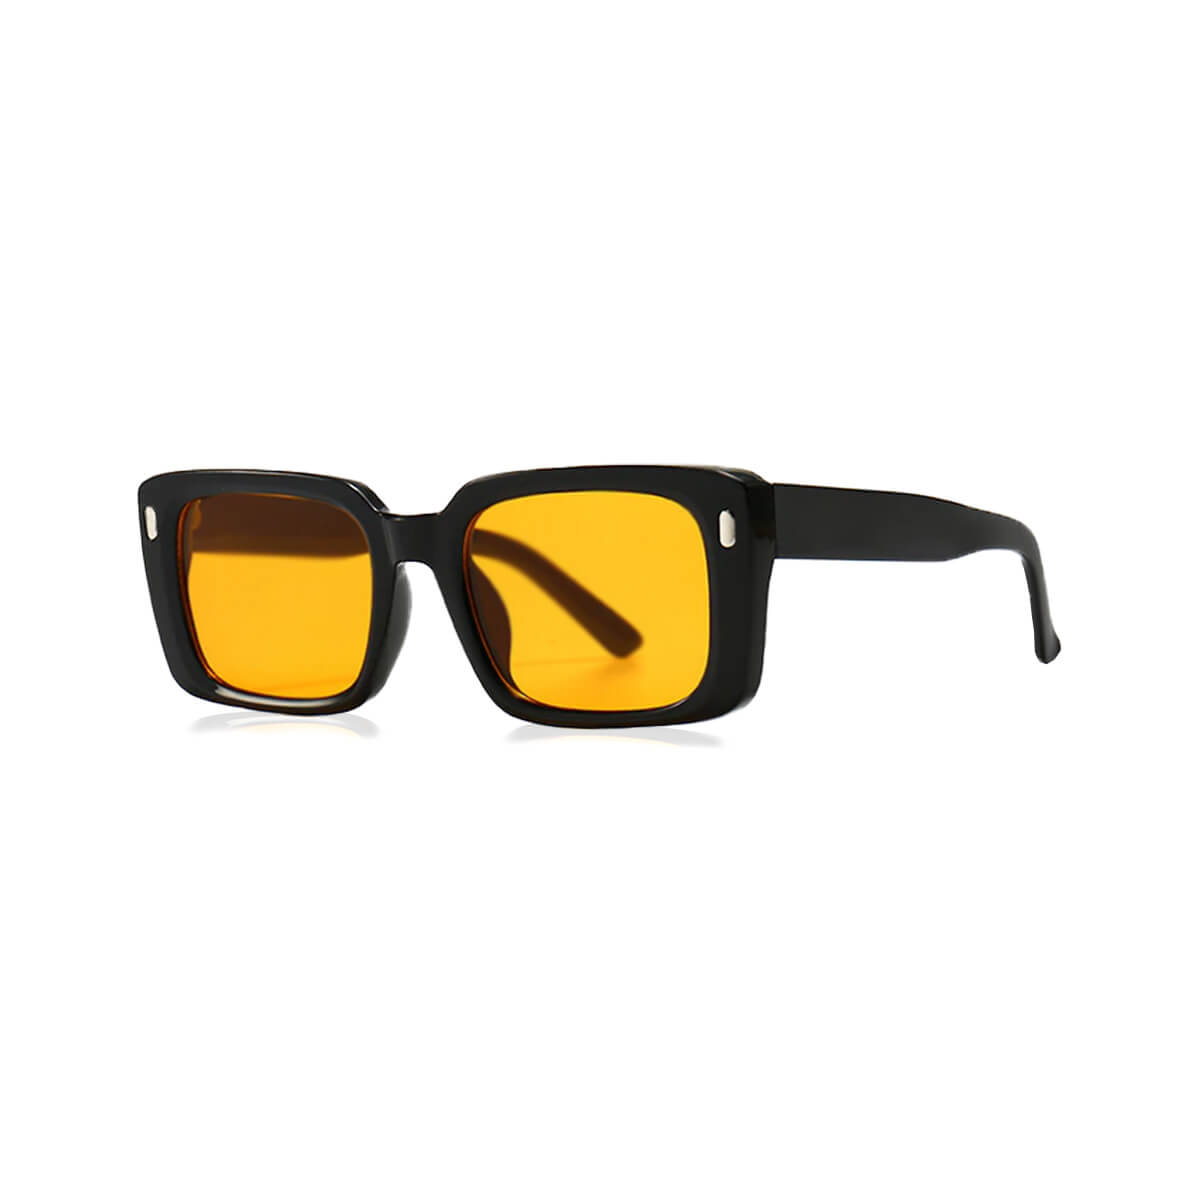 Black Square Frame Slim sunglasses